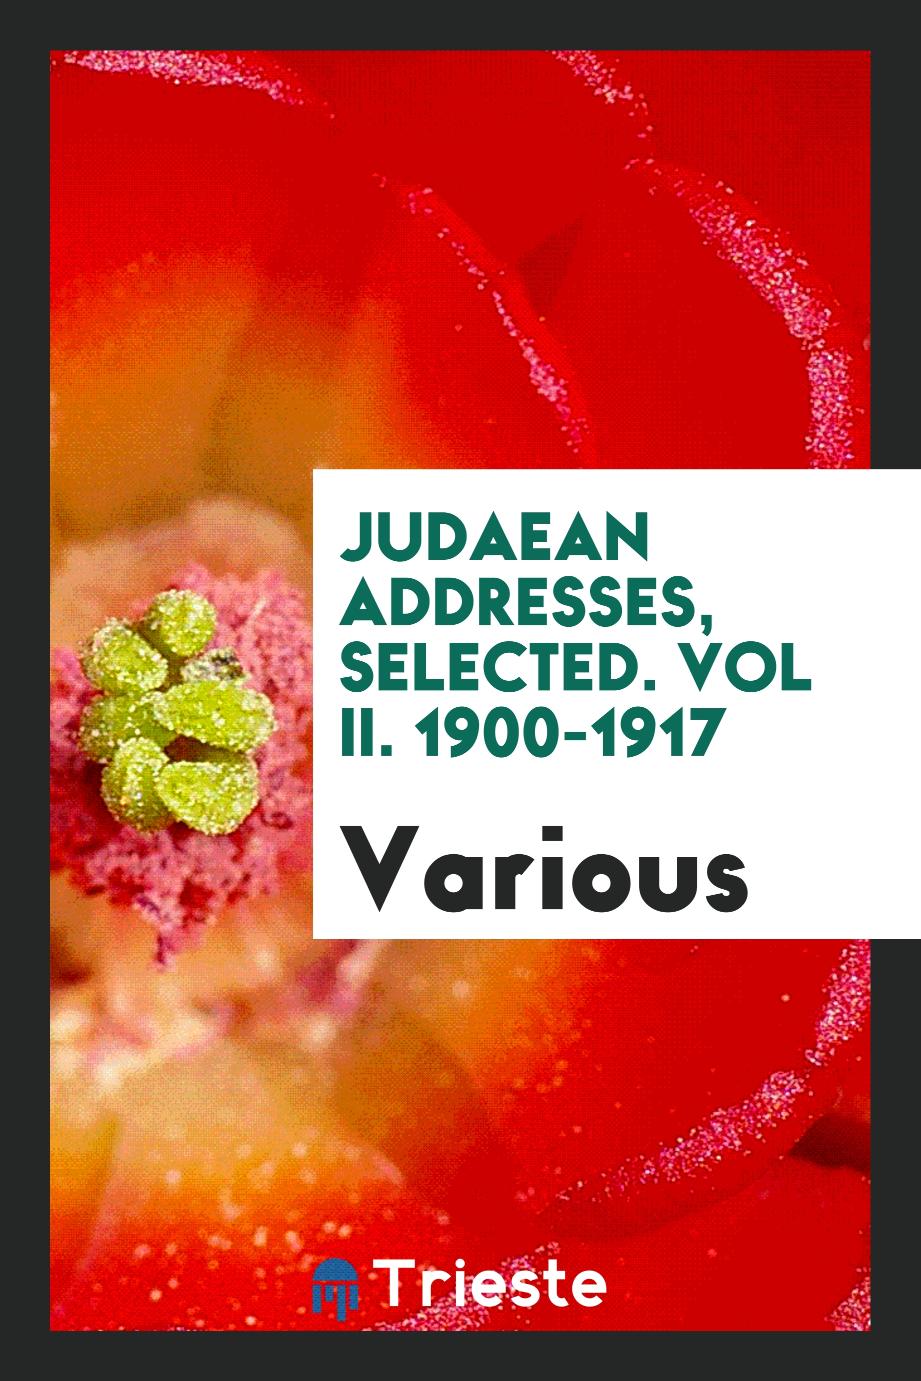 Judaean addresses, selected. Vol II. 1900-1917